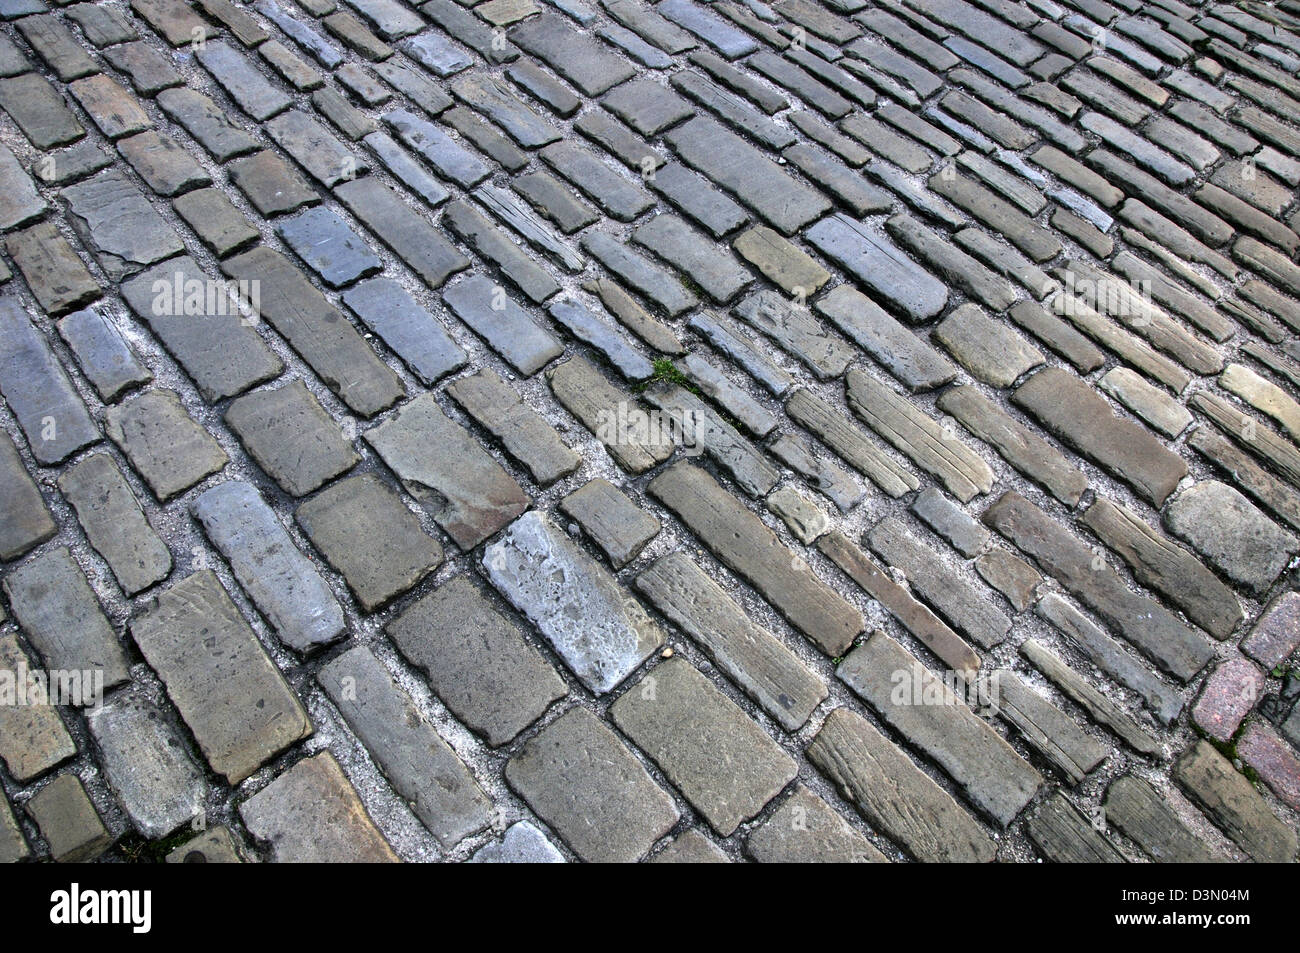 A street of cobble stones Stock Photo